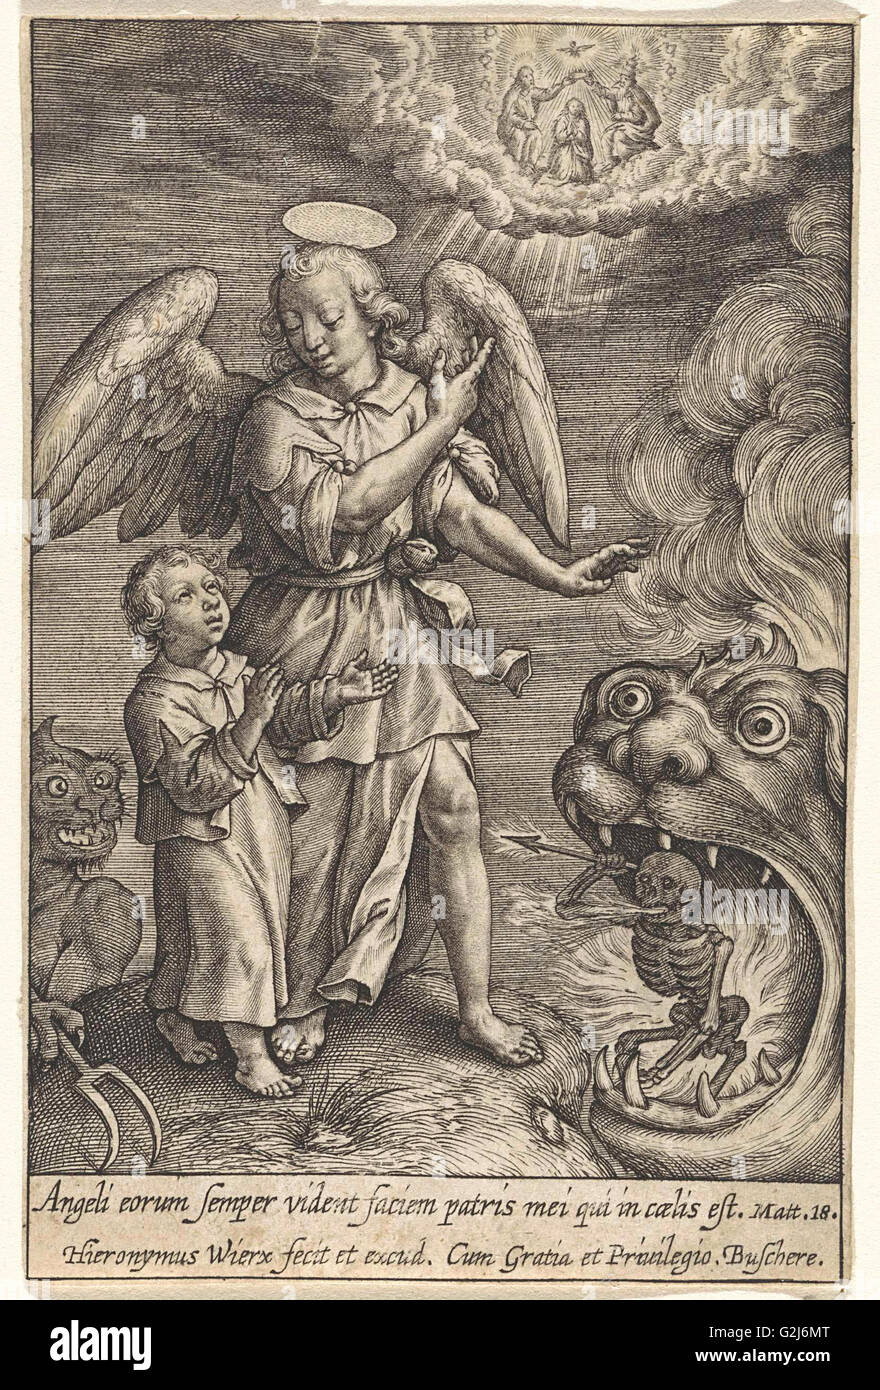 Child with guardian angel, Hieronymus Wierix, 1563 Stock Photo